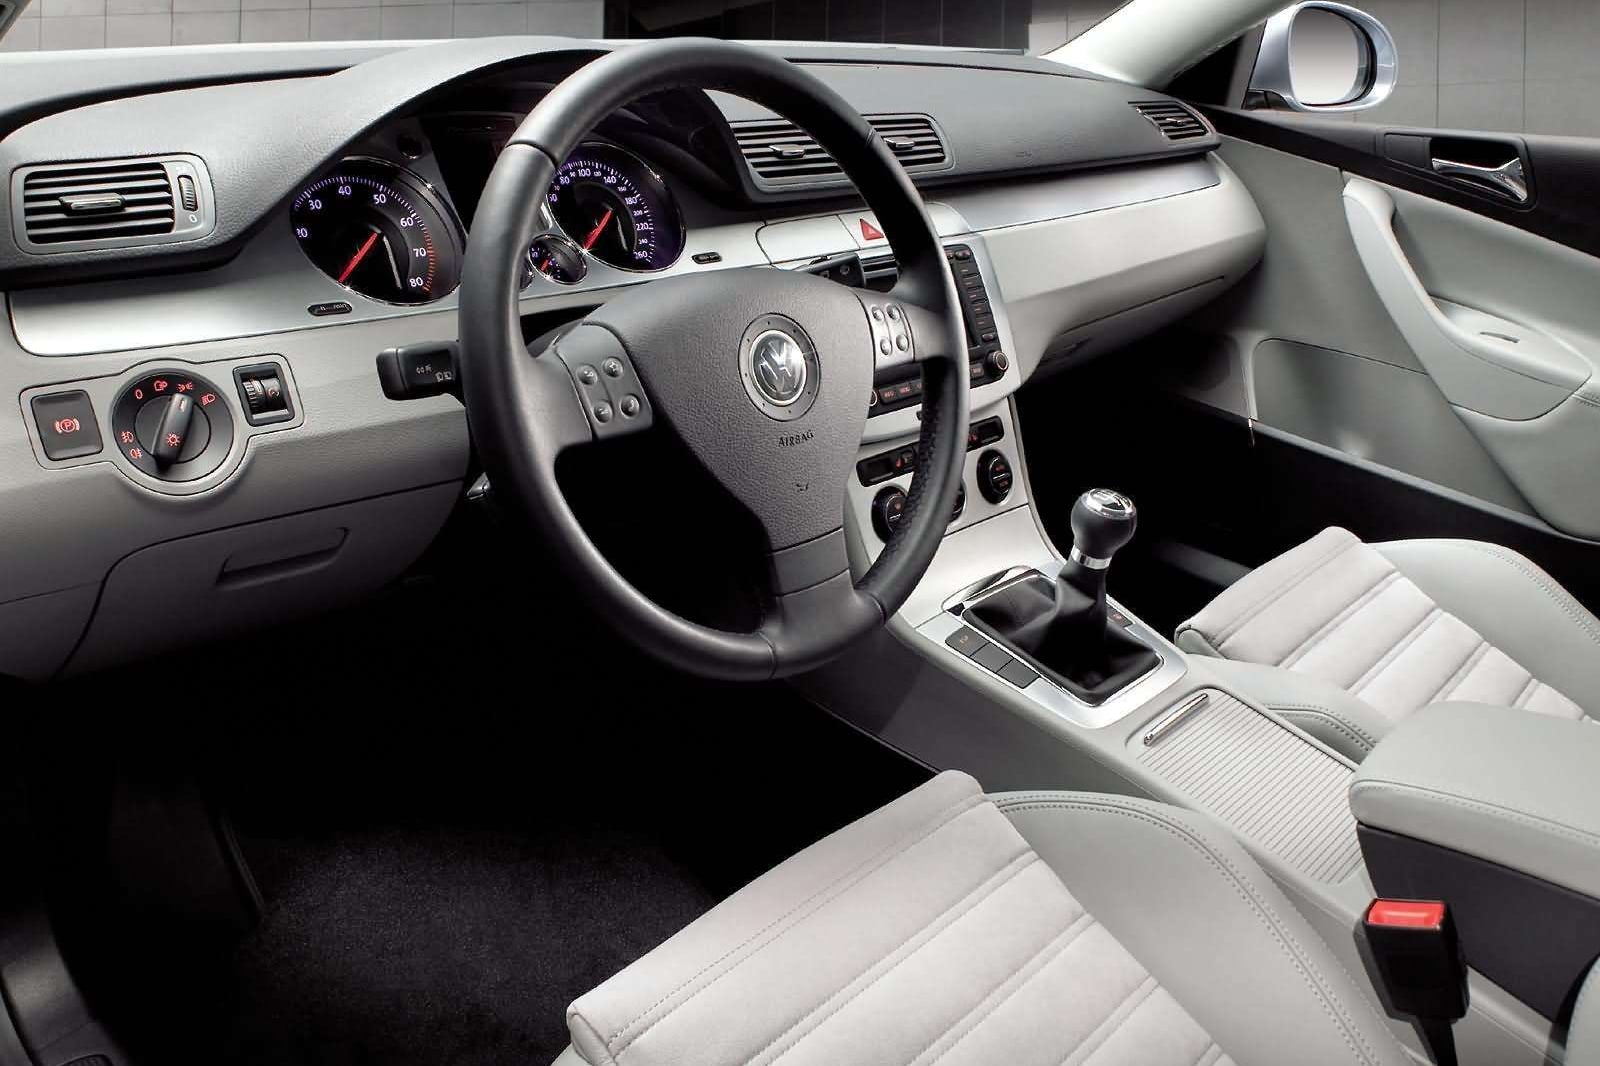 2006 Volkswagen Passat Interior Photos | CarBuzz